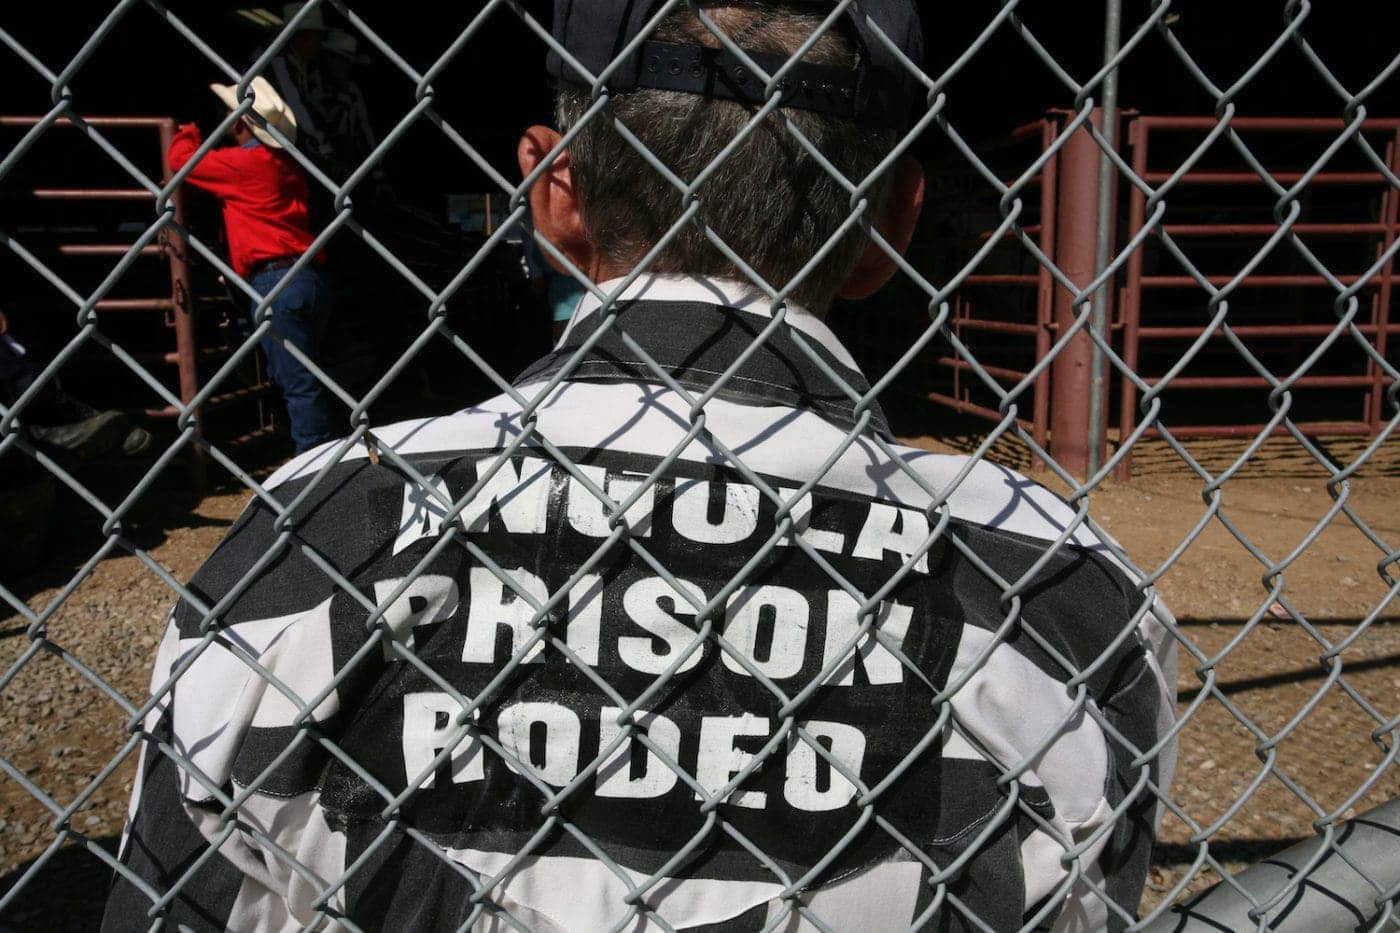 Angola-Prison-Rodeo-prisoner-participant-1400x933, The Angola gulag, Abolition Now! 